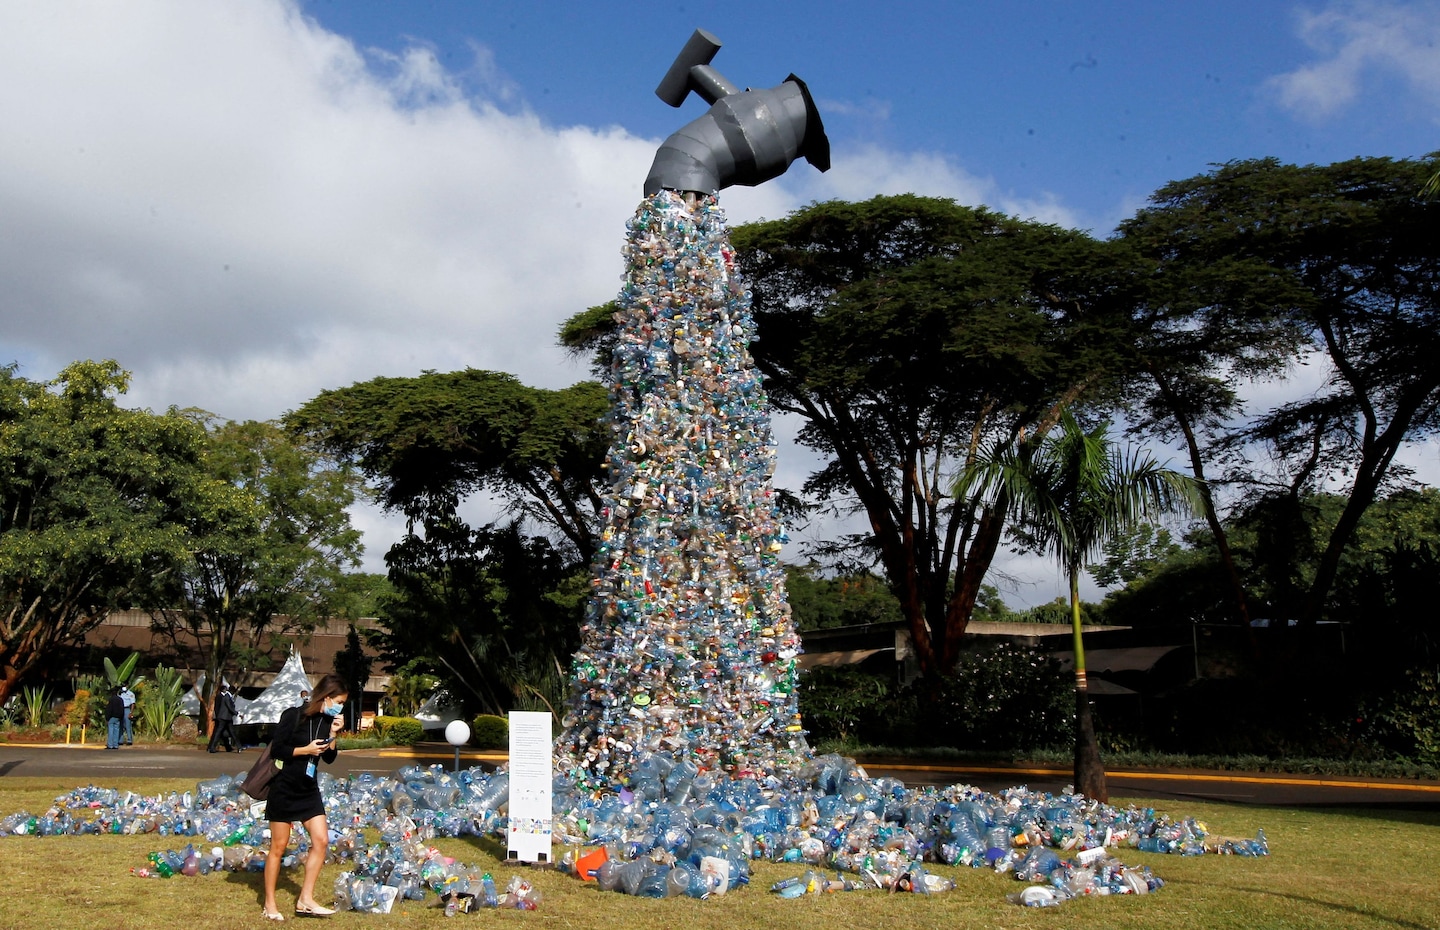 U.N. adopts historic resolution aimed at ending plastic pollution - The Washington Post